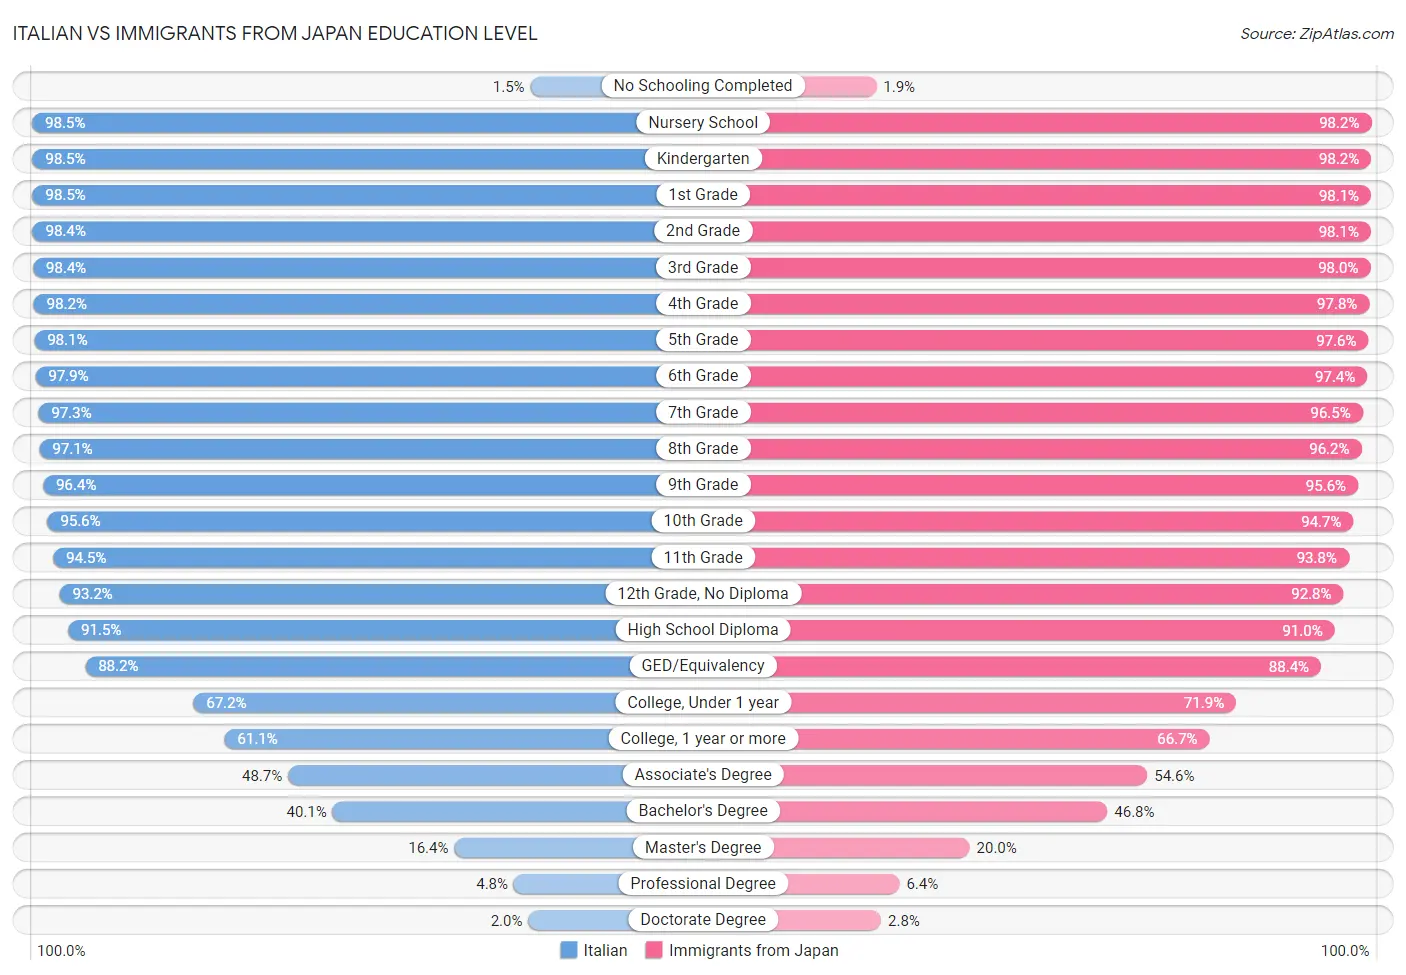 Italian vs Immigrants from Japan Education Level